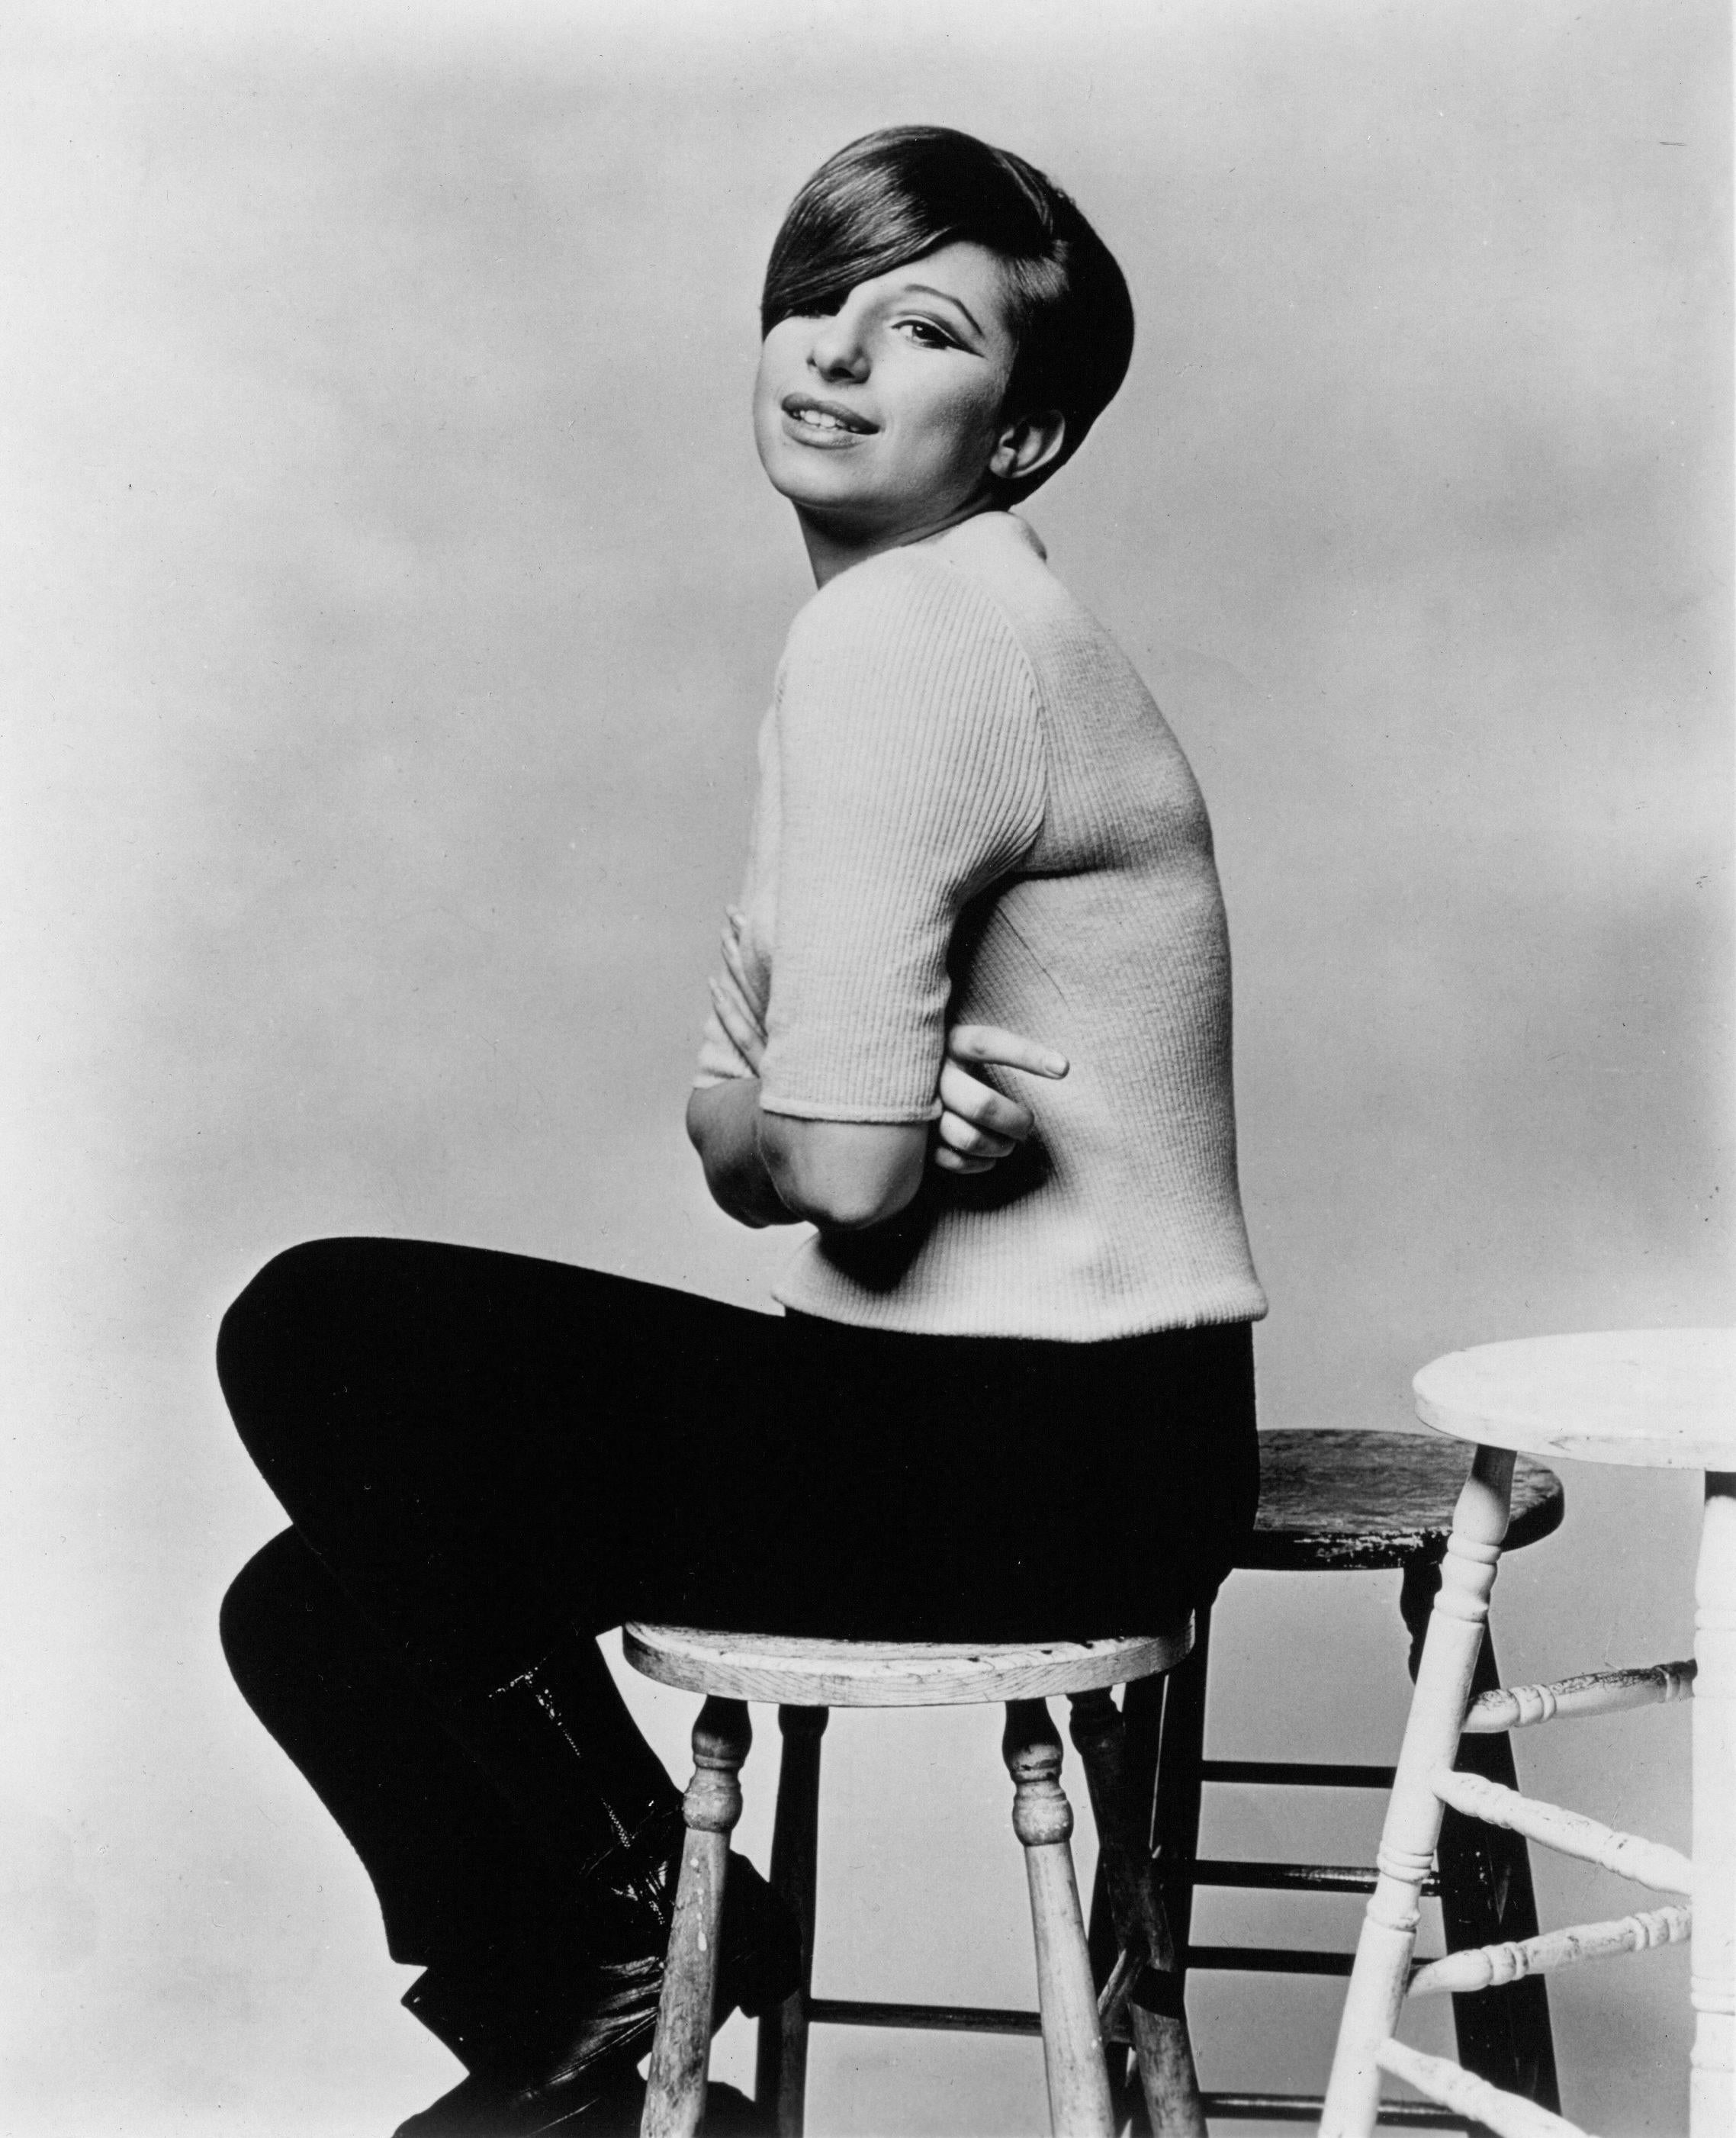 Unknown Black and White Photograph - Barbra Streisand Posing on Stool Vintage Original Photograph